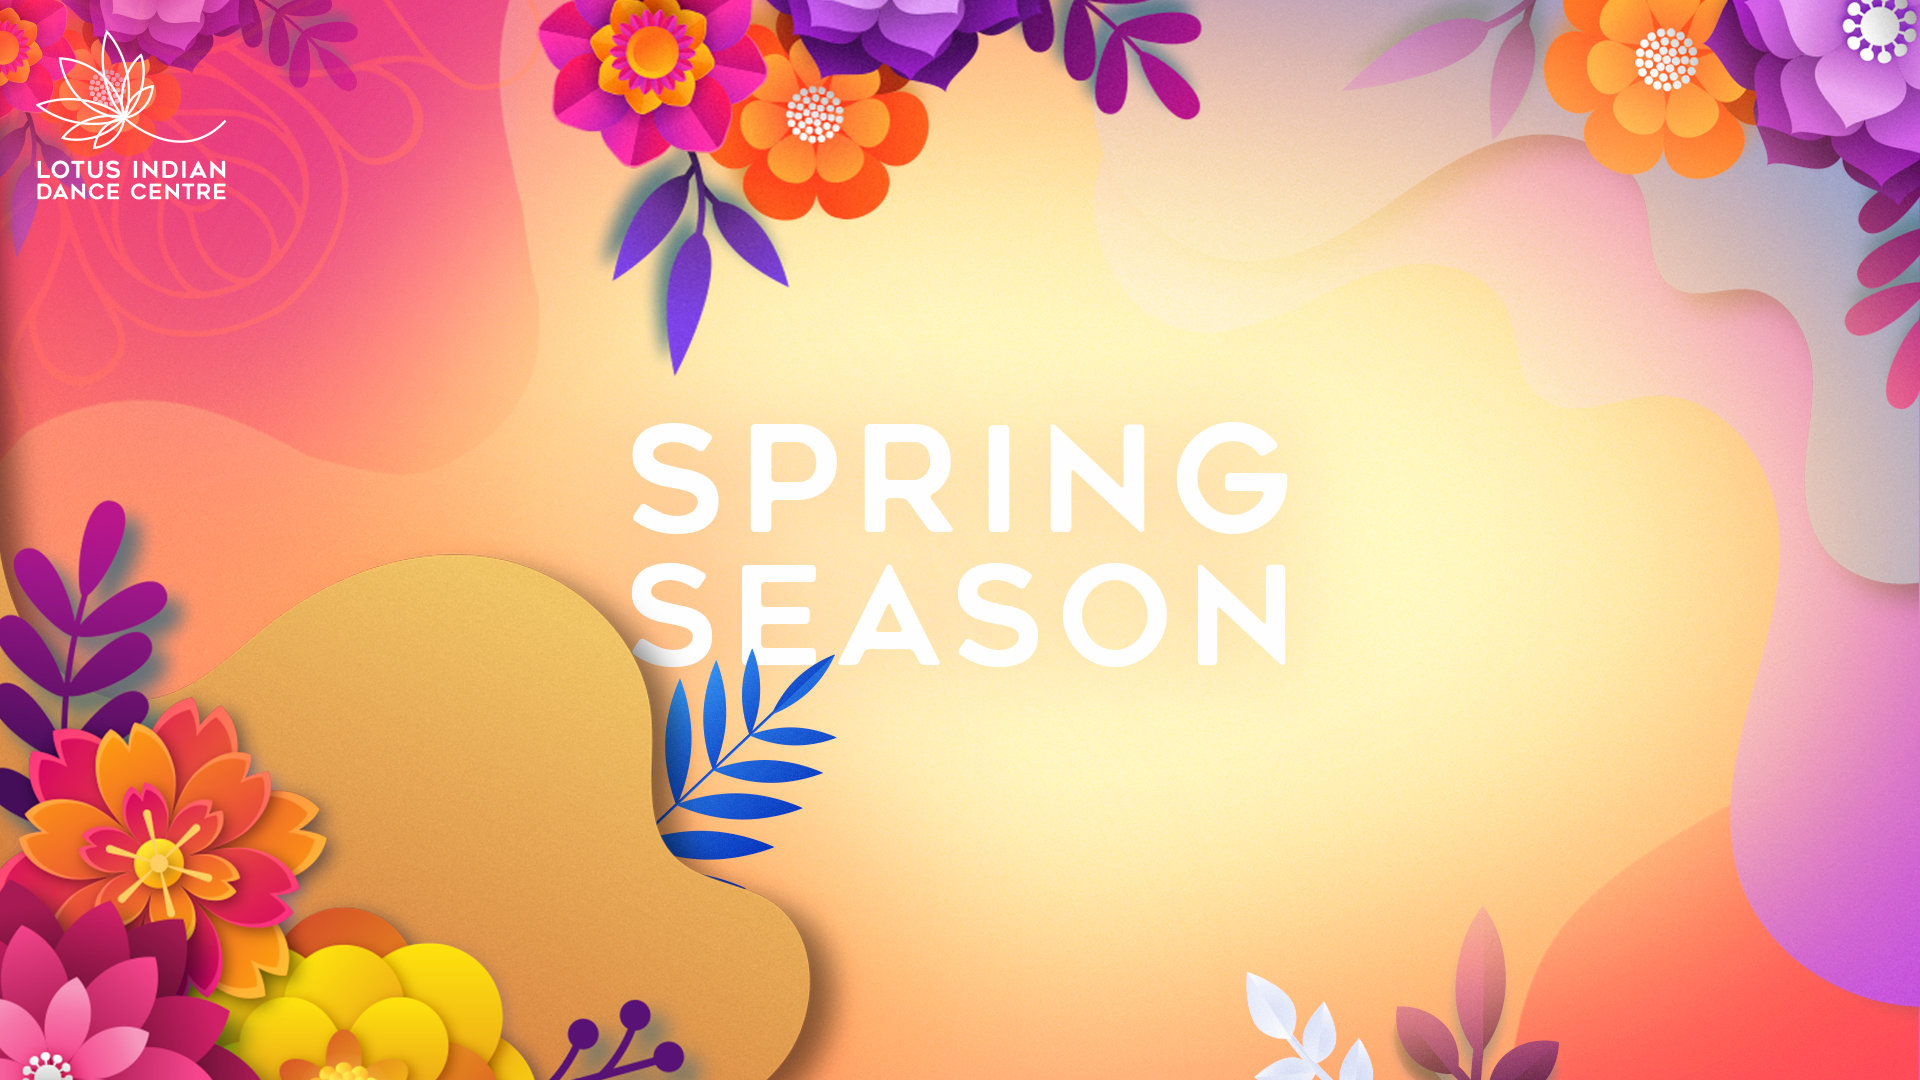 FB-cover-event-1920x1080-spring-season